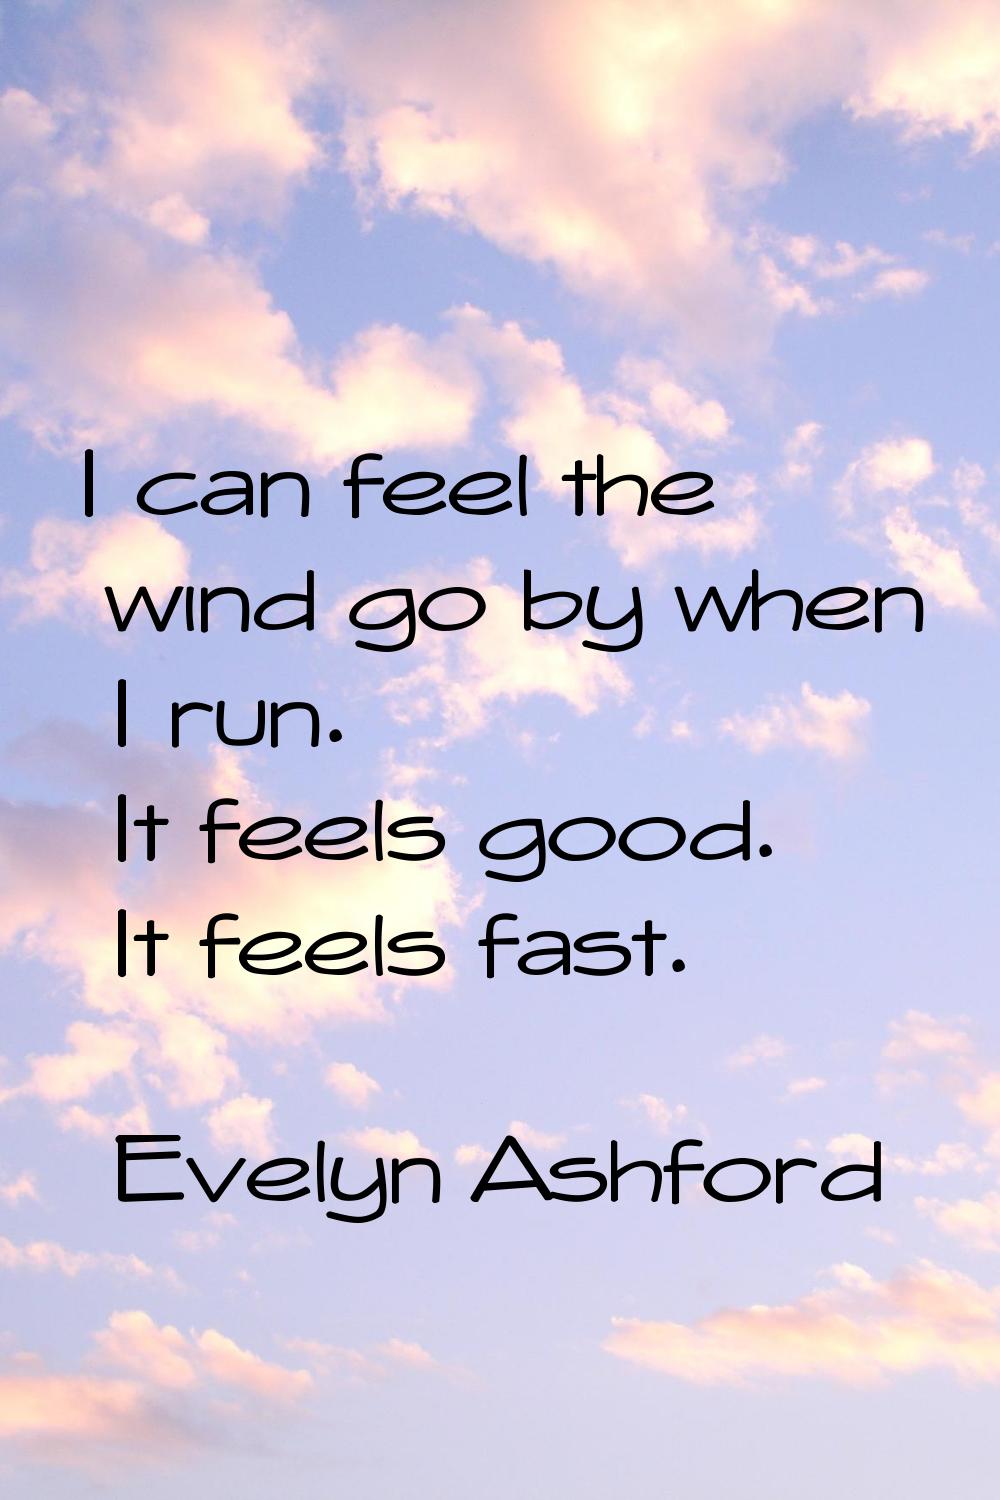 I can feel the wind go by when I run. It feels good. It feels fast.